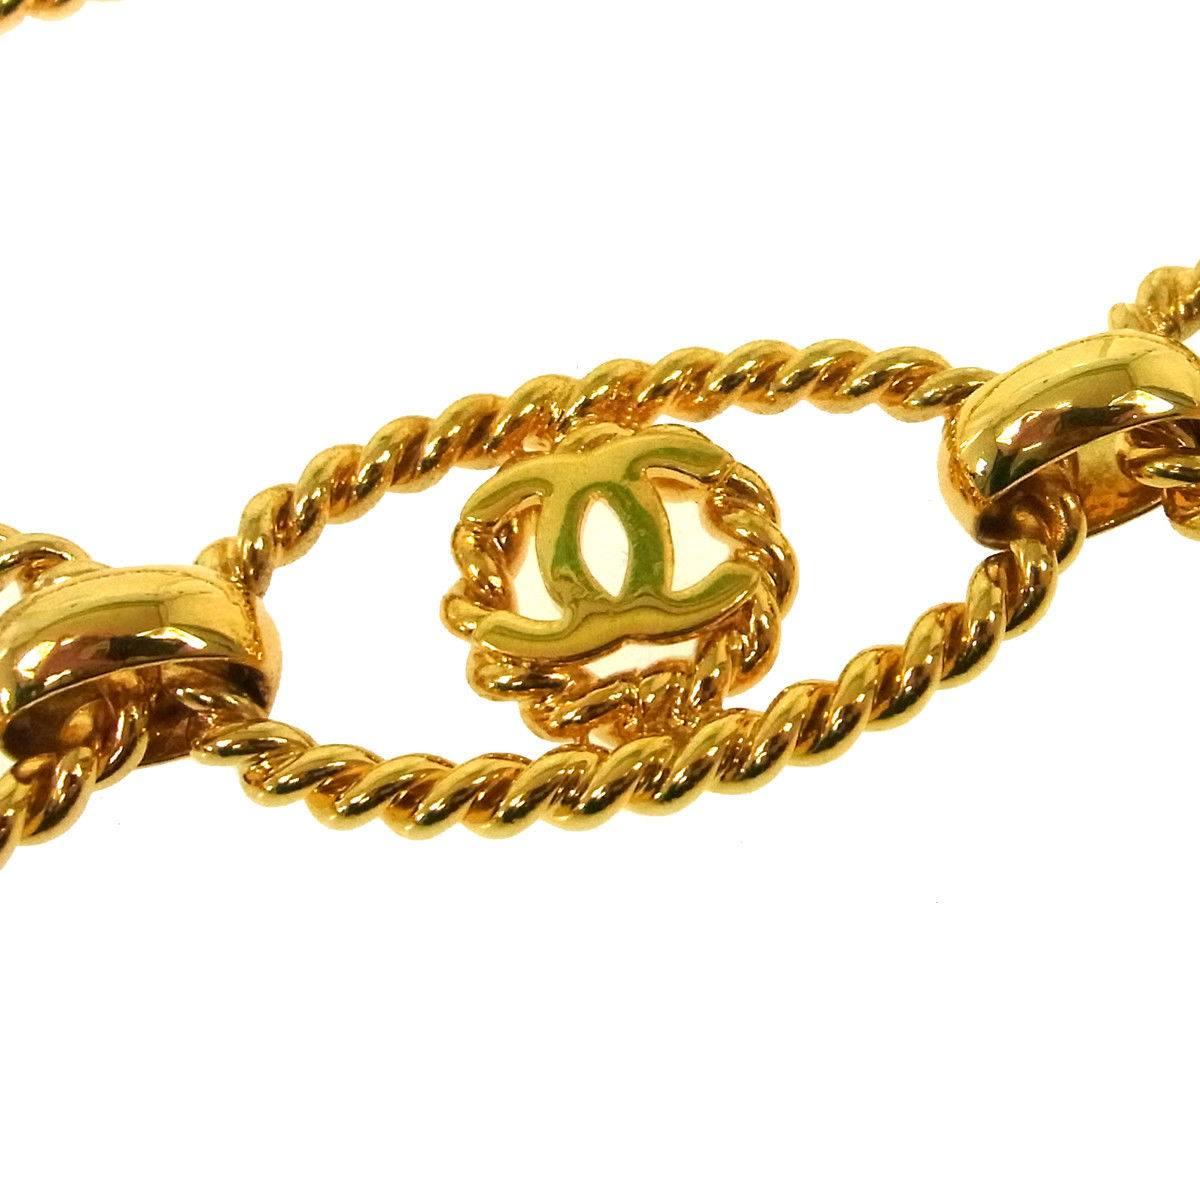 Chanel Metal Gold Textured Logo Evening Waist Belt

Metal
Gold tone hardware
Hook closure
Made in France
Total length 36"